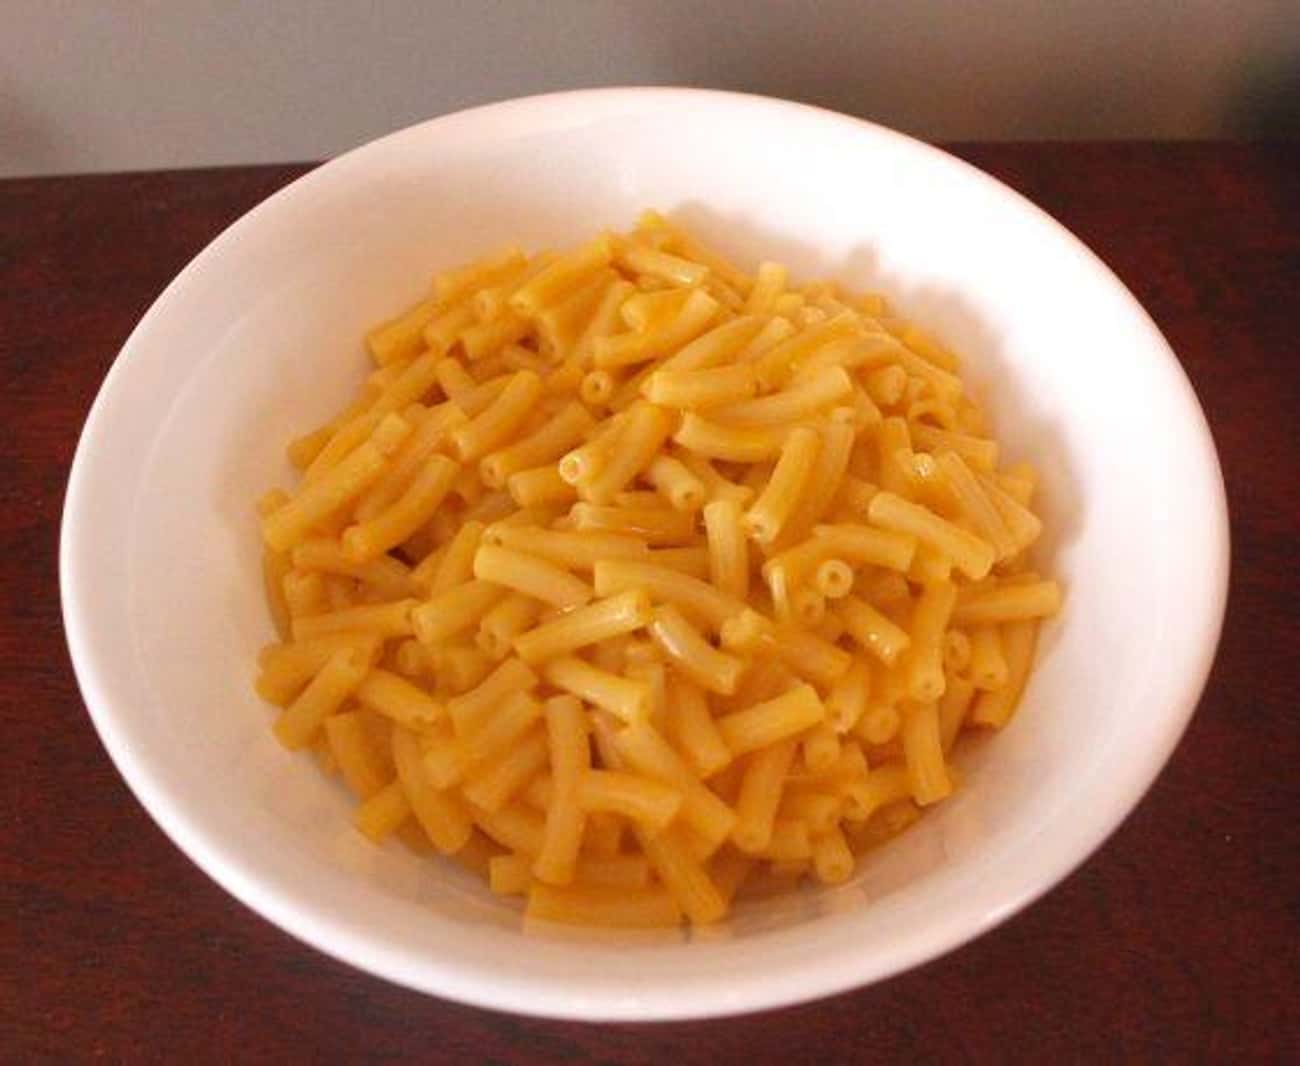 Kraft Macaroni & Cheese Contains 'Plasticizers'